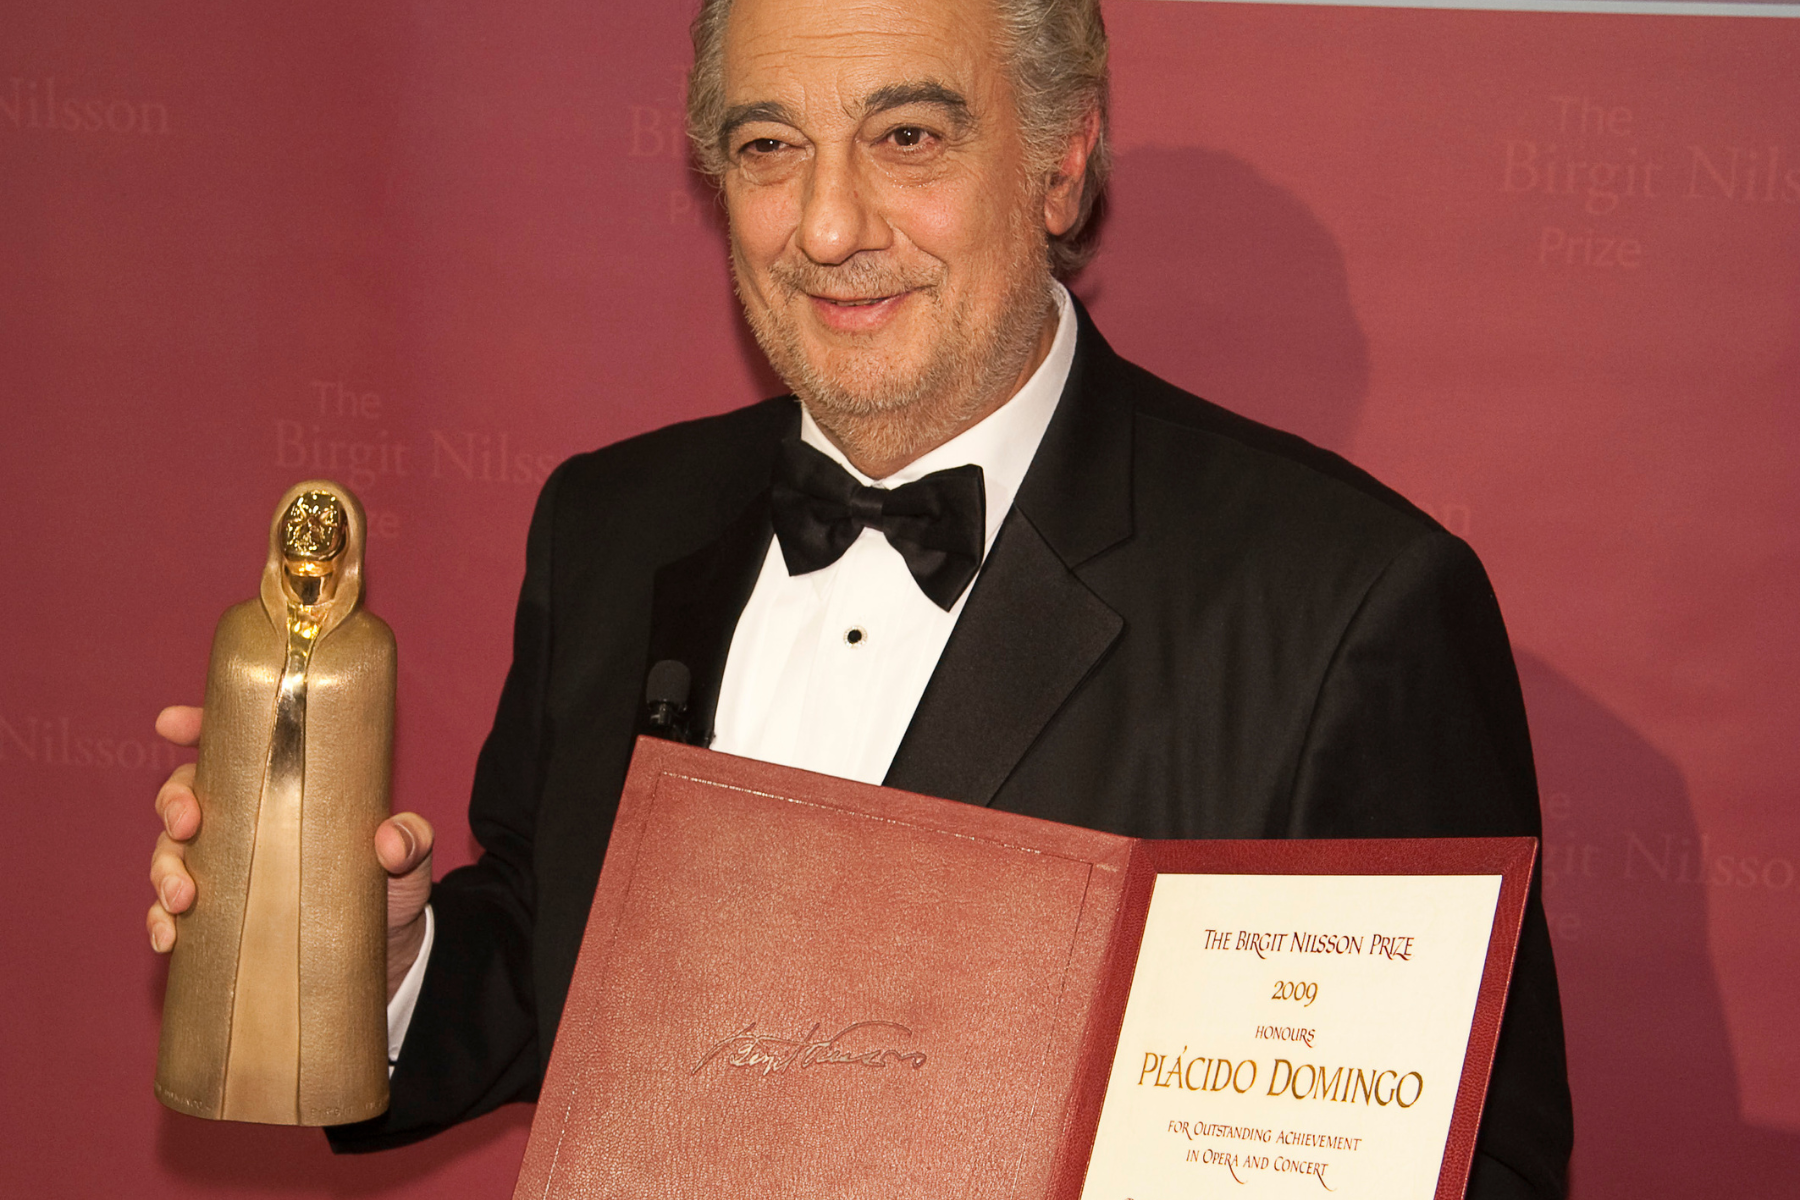 You are currently viewing Plácido Domingo – Birgit Nilsson Prize ceremony 2009